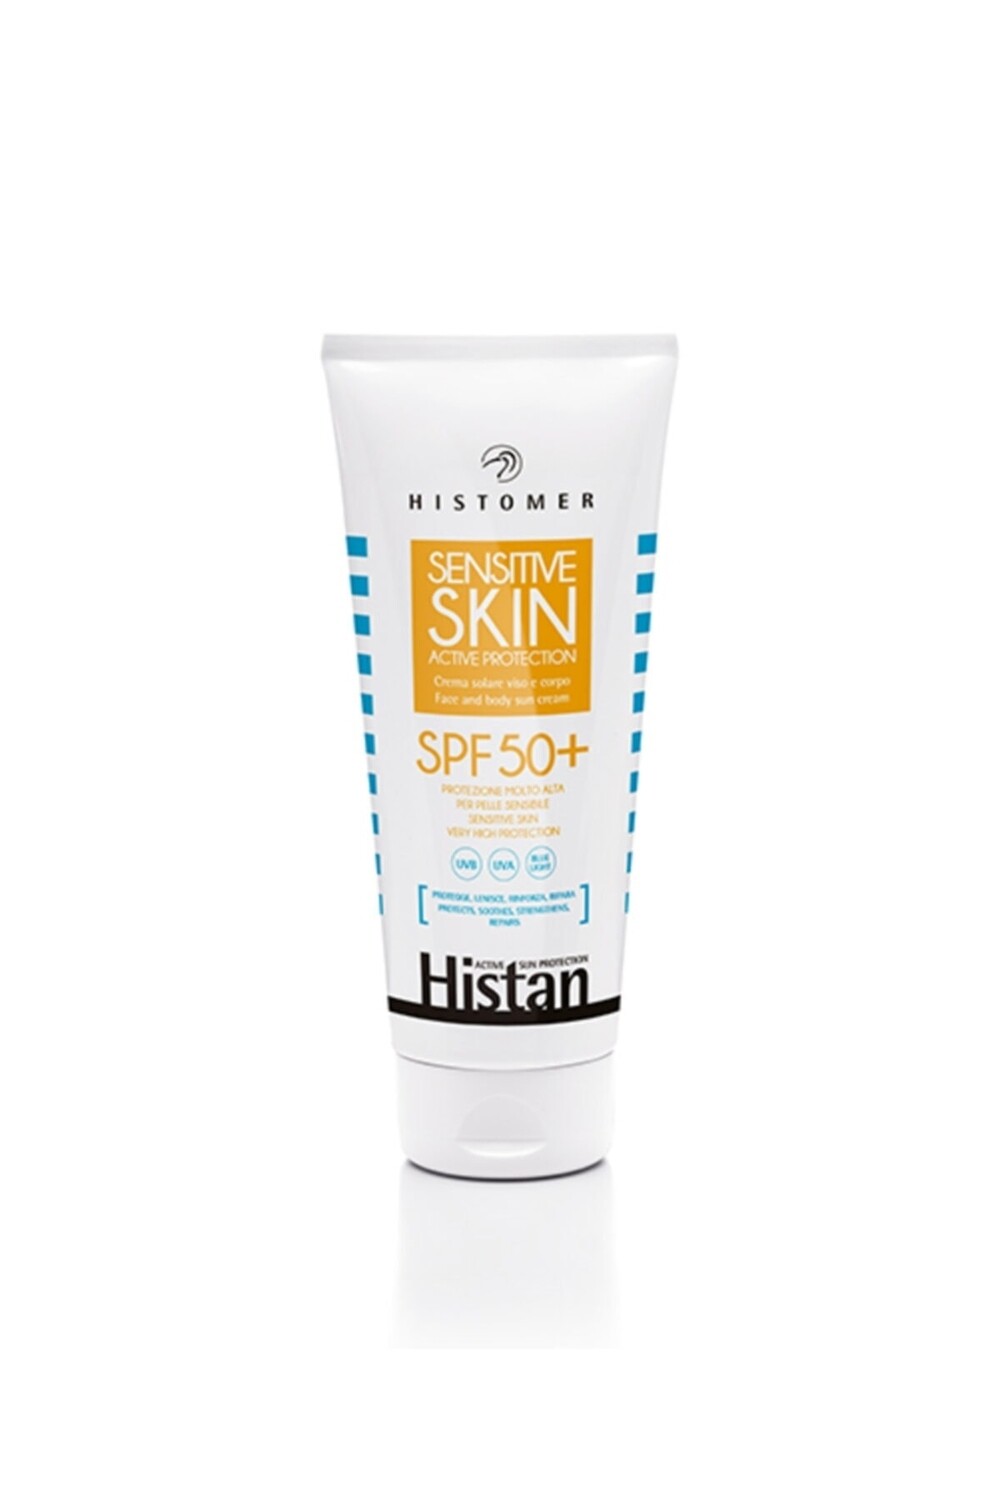 Histomer Histan Sensitive Skin Active Protection SPF 50+ 200ml Сонцезахисний крем для обличчя та тіла